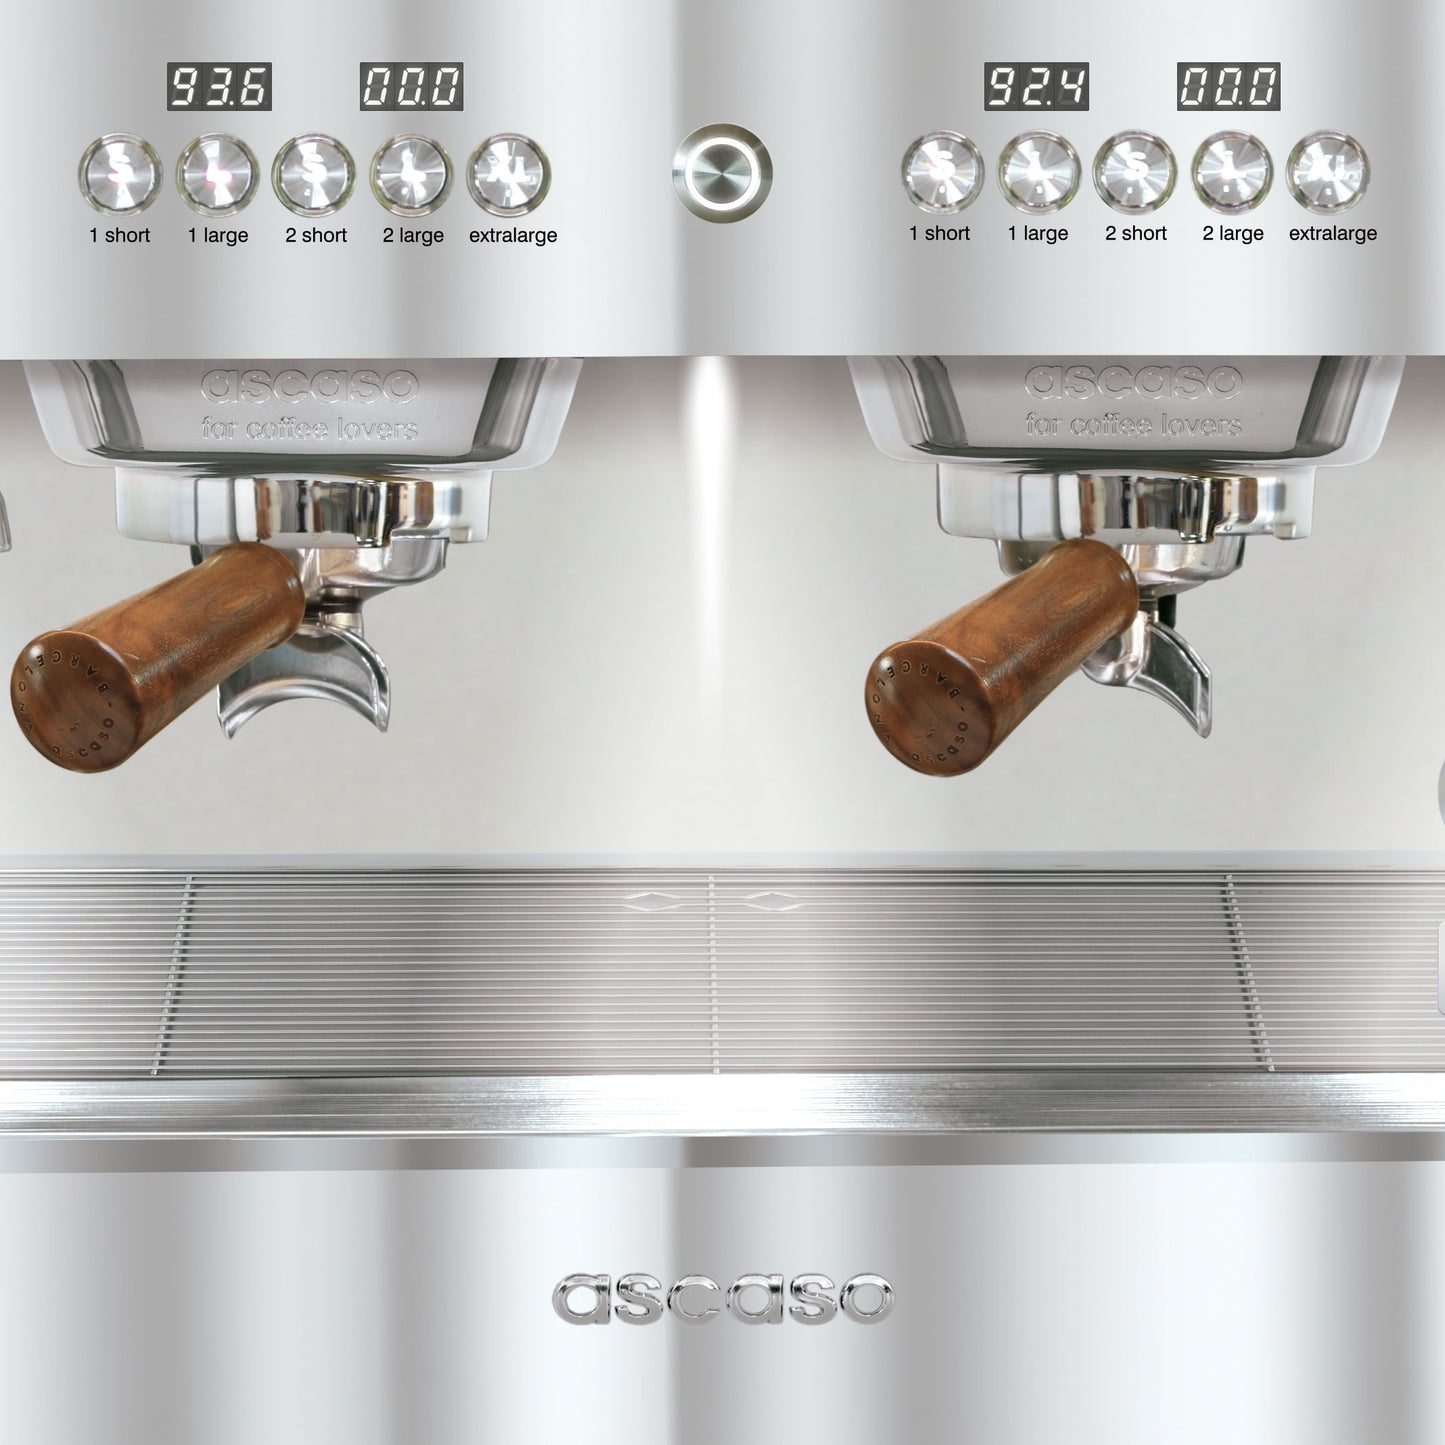 Barista T Plus, Automatic 3 Group Espresso Machine, with Thermodynamic Technology (Inox)